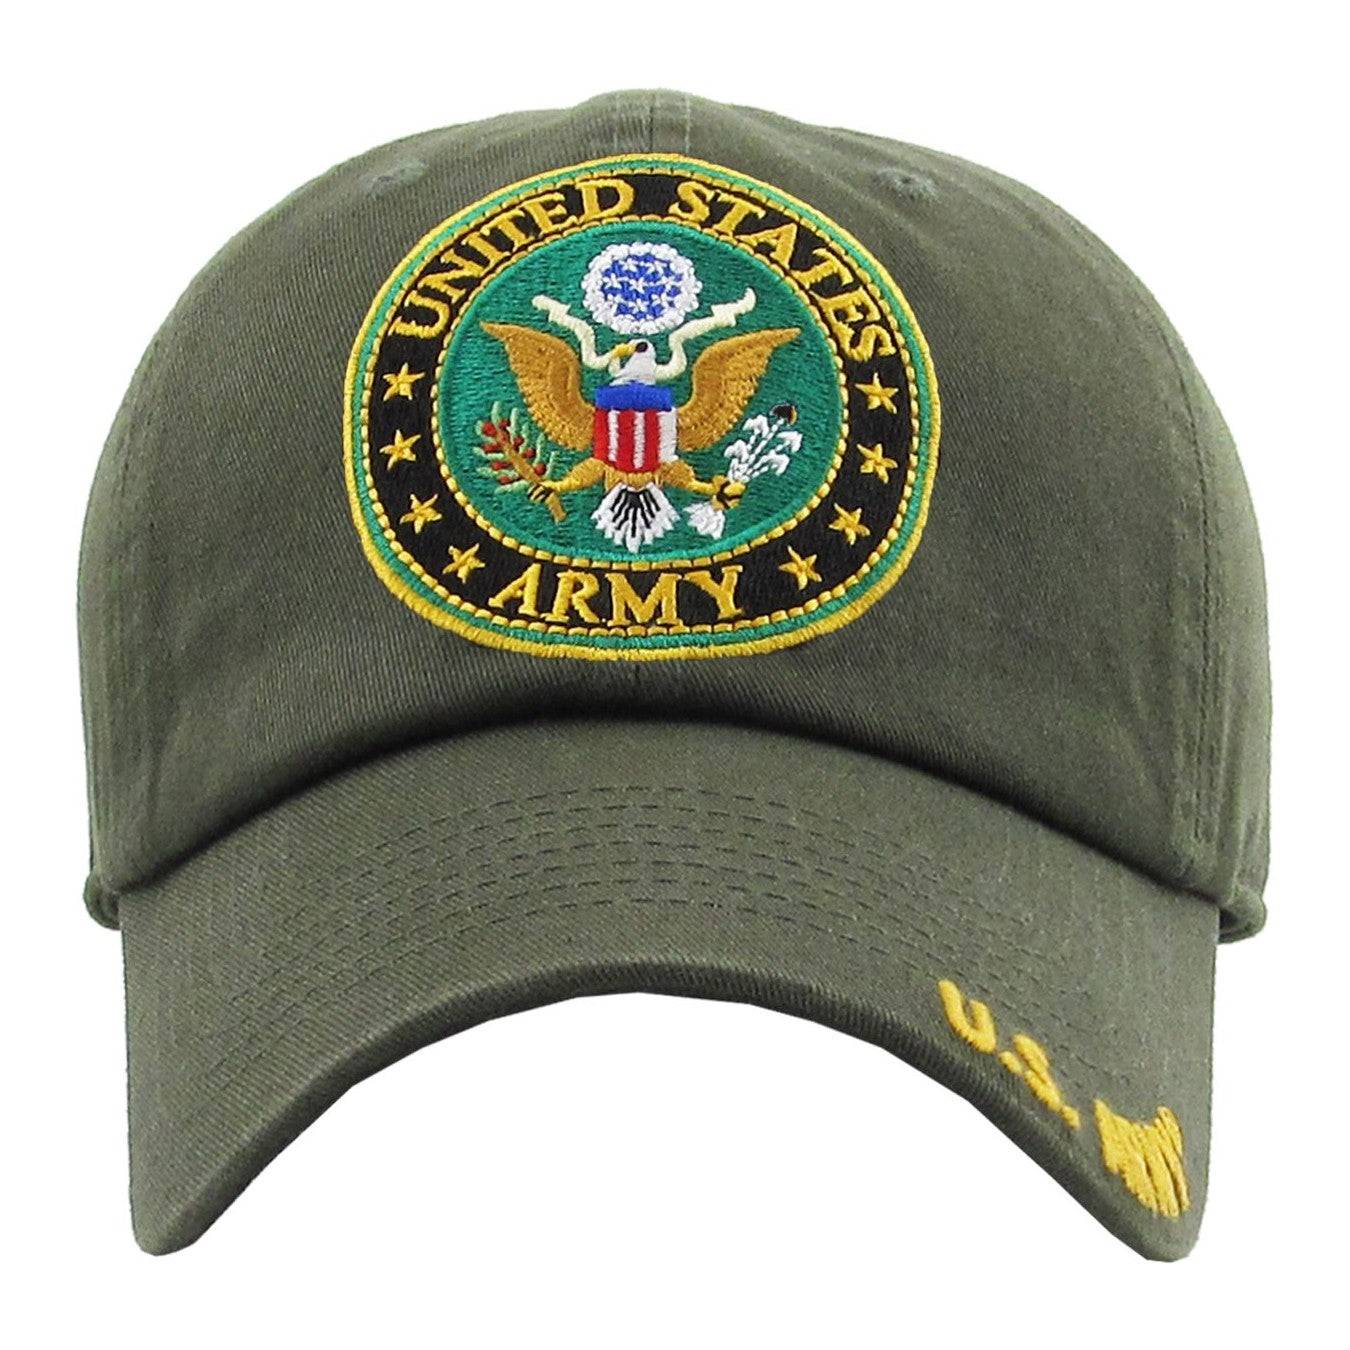 US ARMY SEAL Baseball Cap - Oliven Grøn - Baseball Cap fra Ethos hos The Prince Webshop